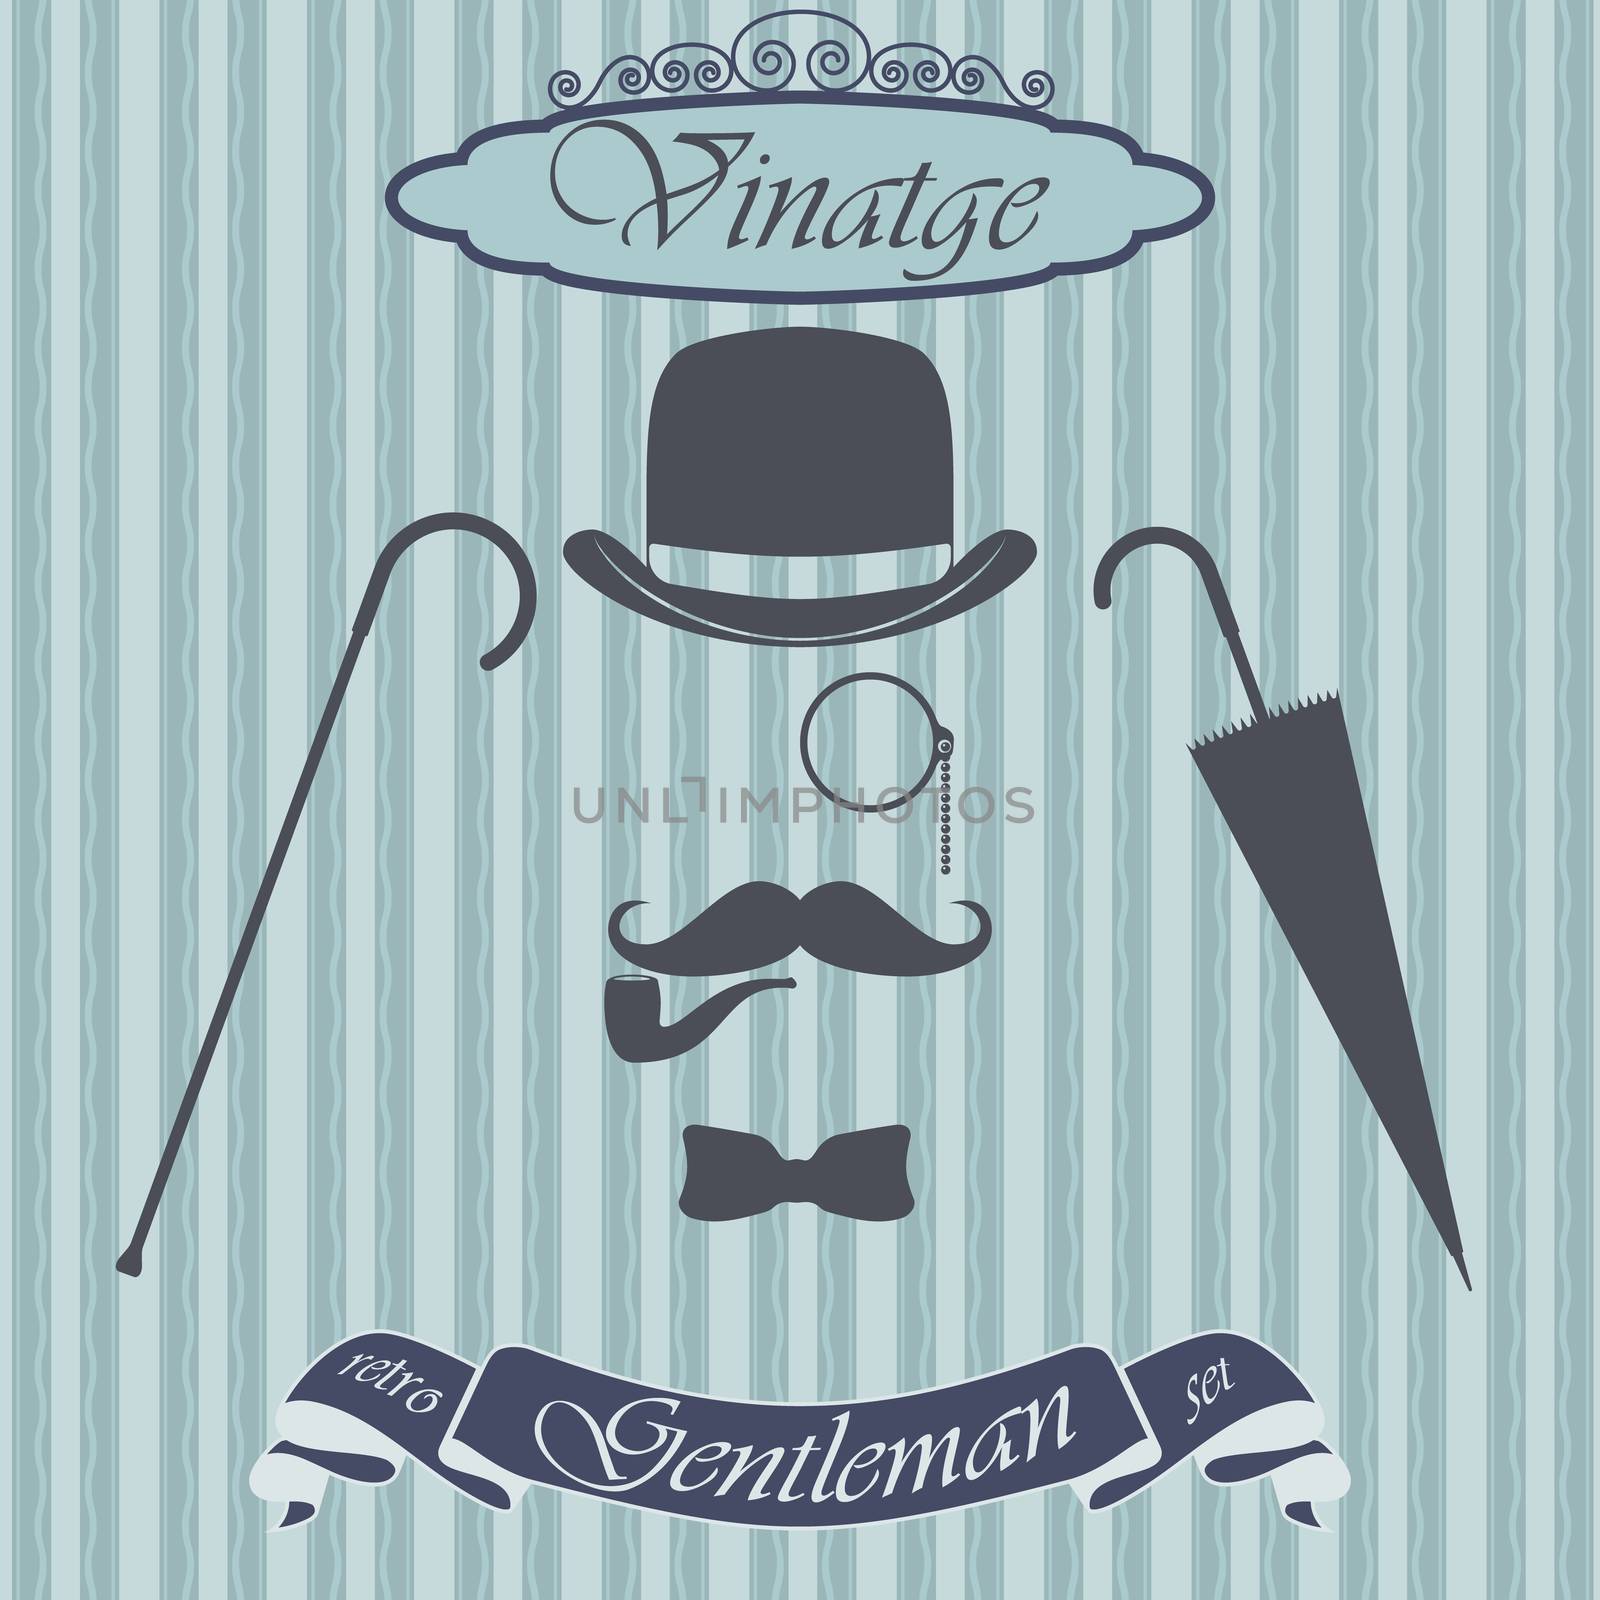 Retro gentleman elements set - bowler, moustache, tobacco pipe monocle, cane and umbrella, on hipster background. Vintage sign design. Old fashiond theme label by Lemon_workshop